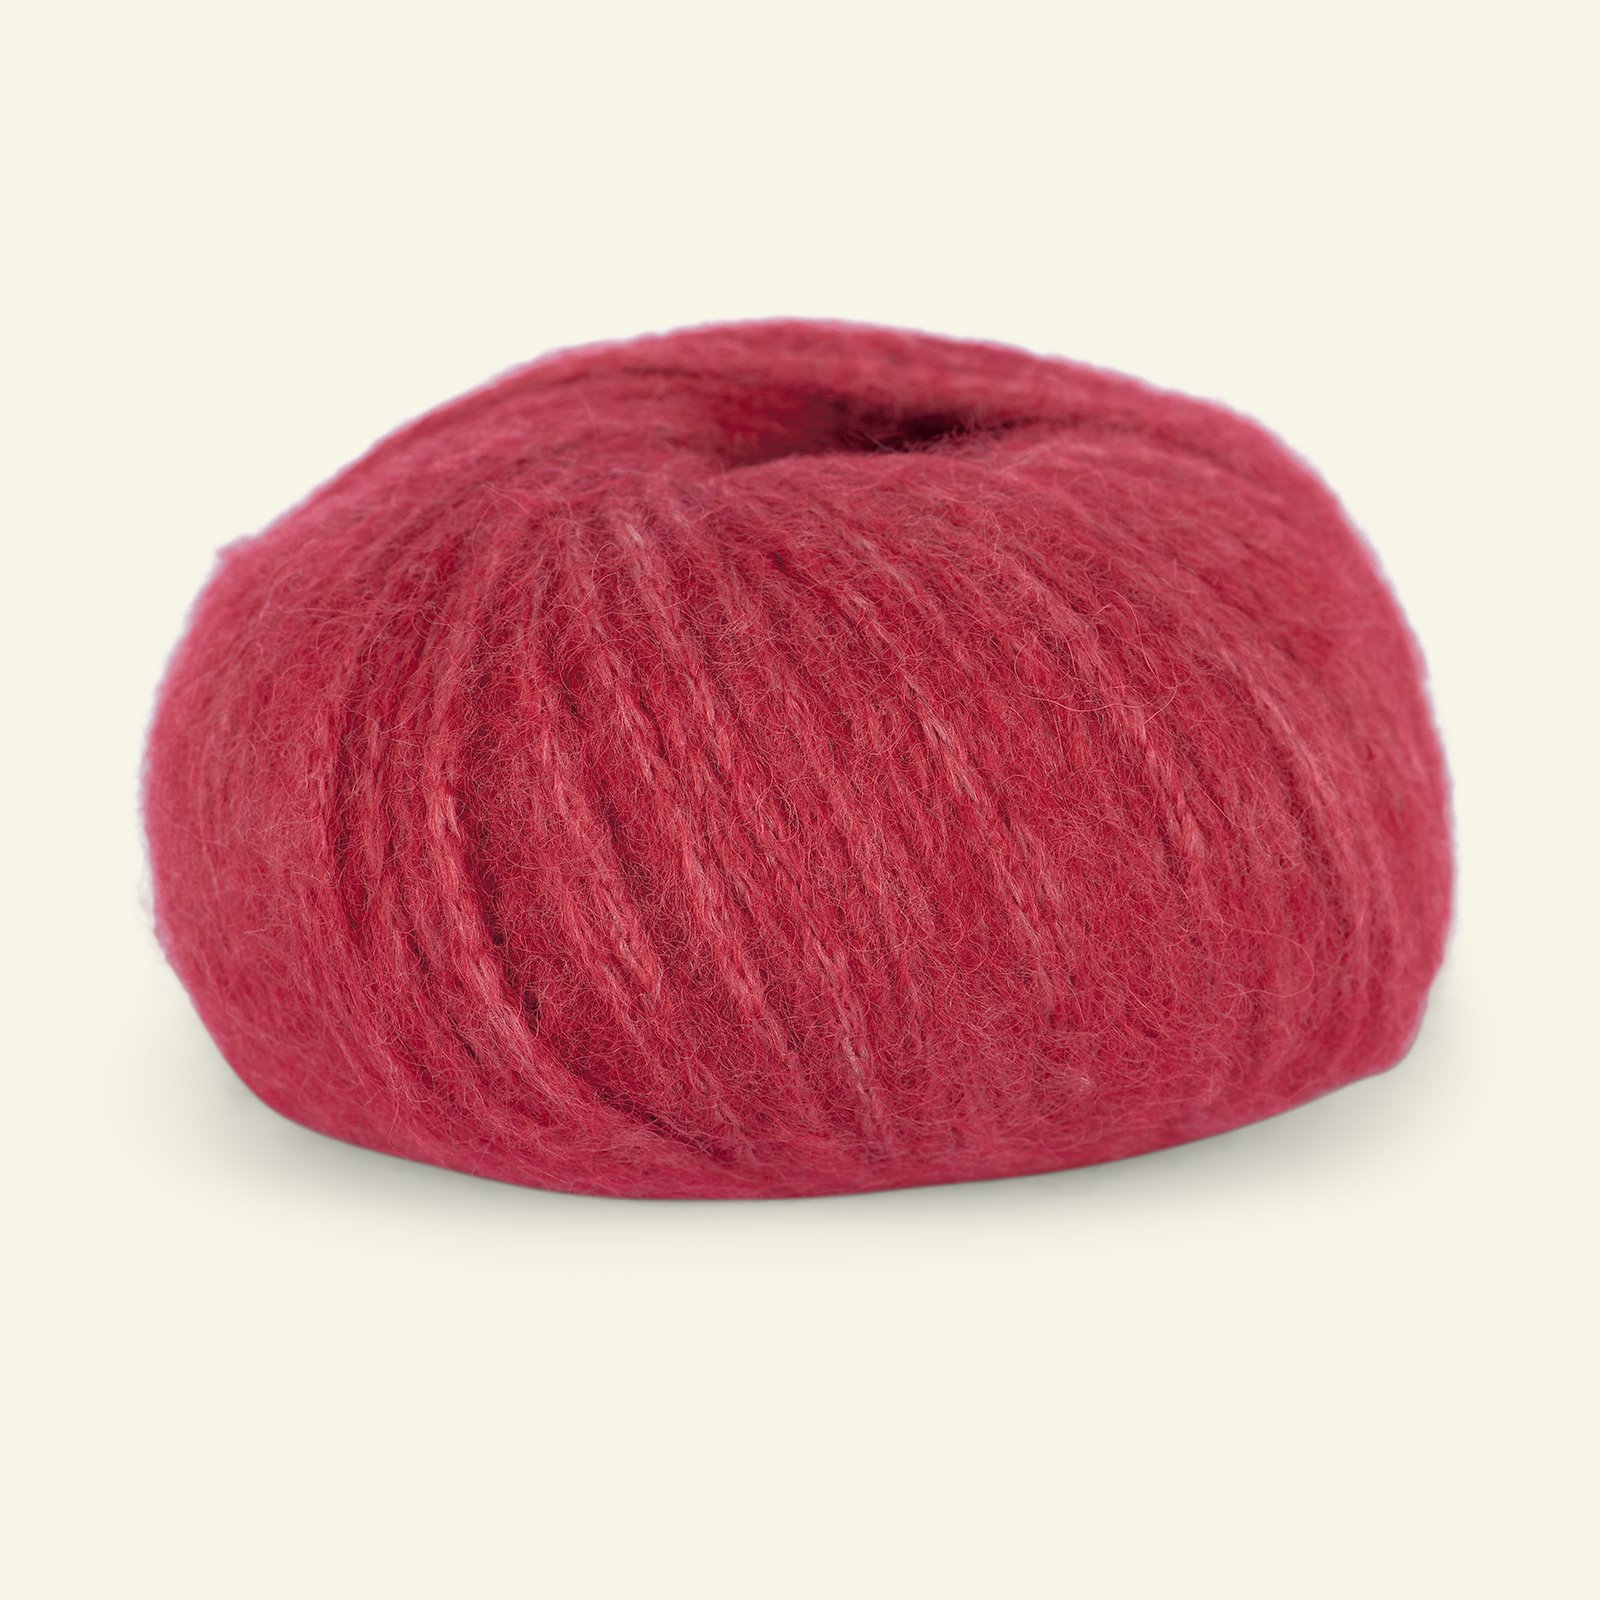 Du Store Alpakka, alpaca mixed yarn "Pus", raspberry red (4018) 90000721_pack_b